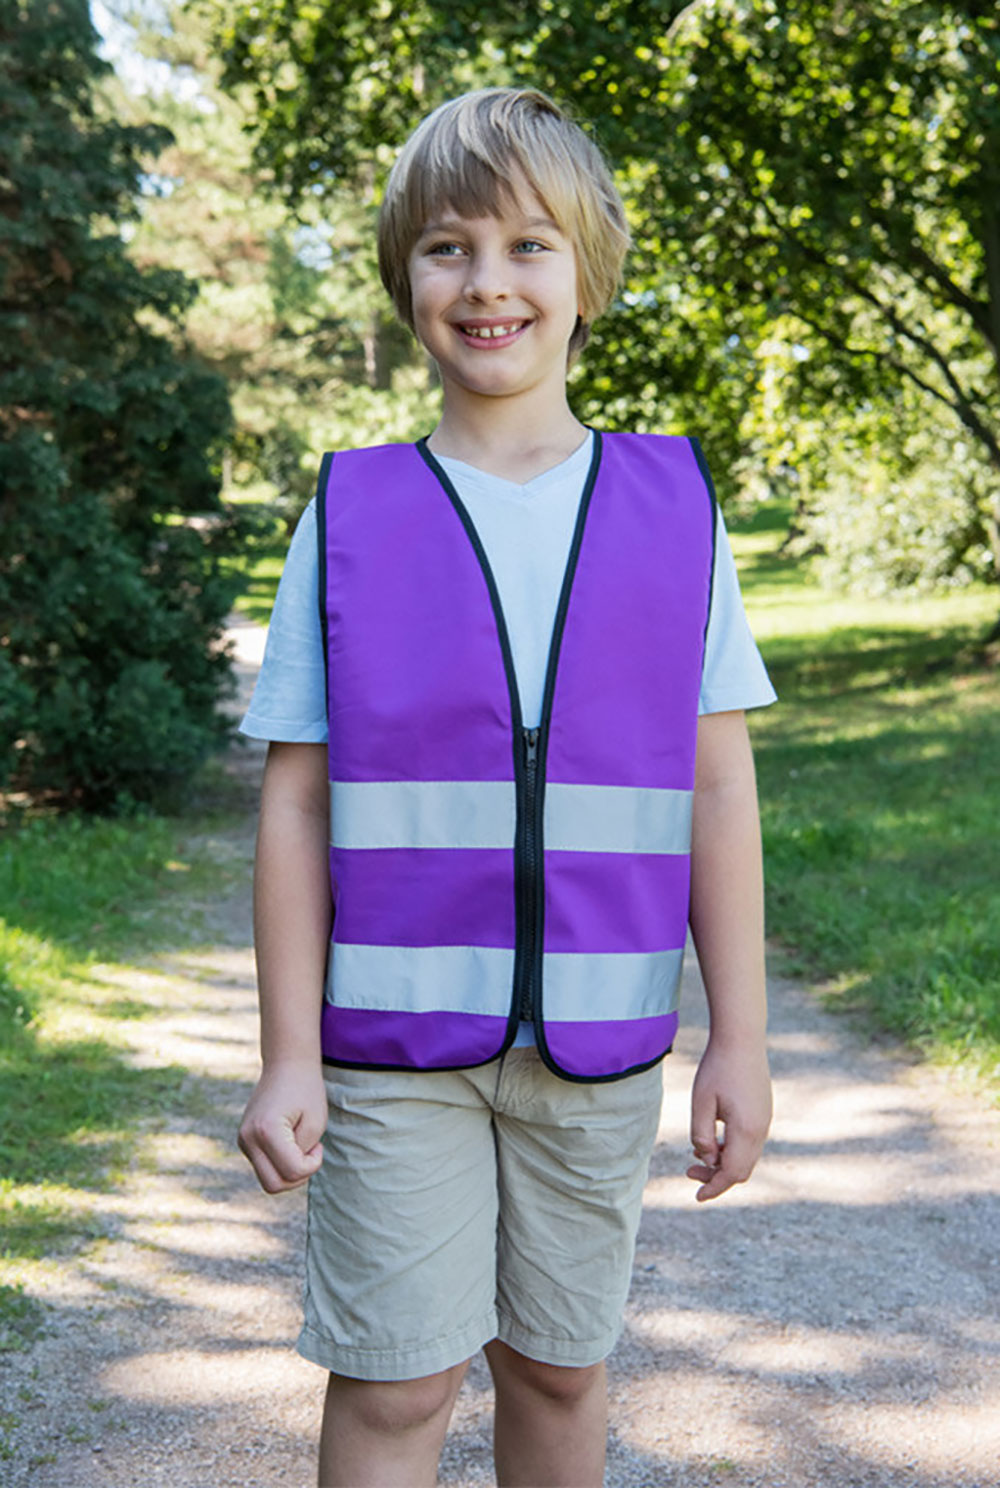 Safety Vest for Kids with Zipper EN1150 Korntex KX201